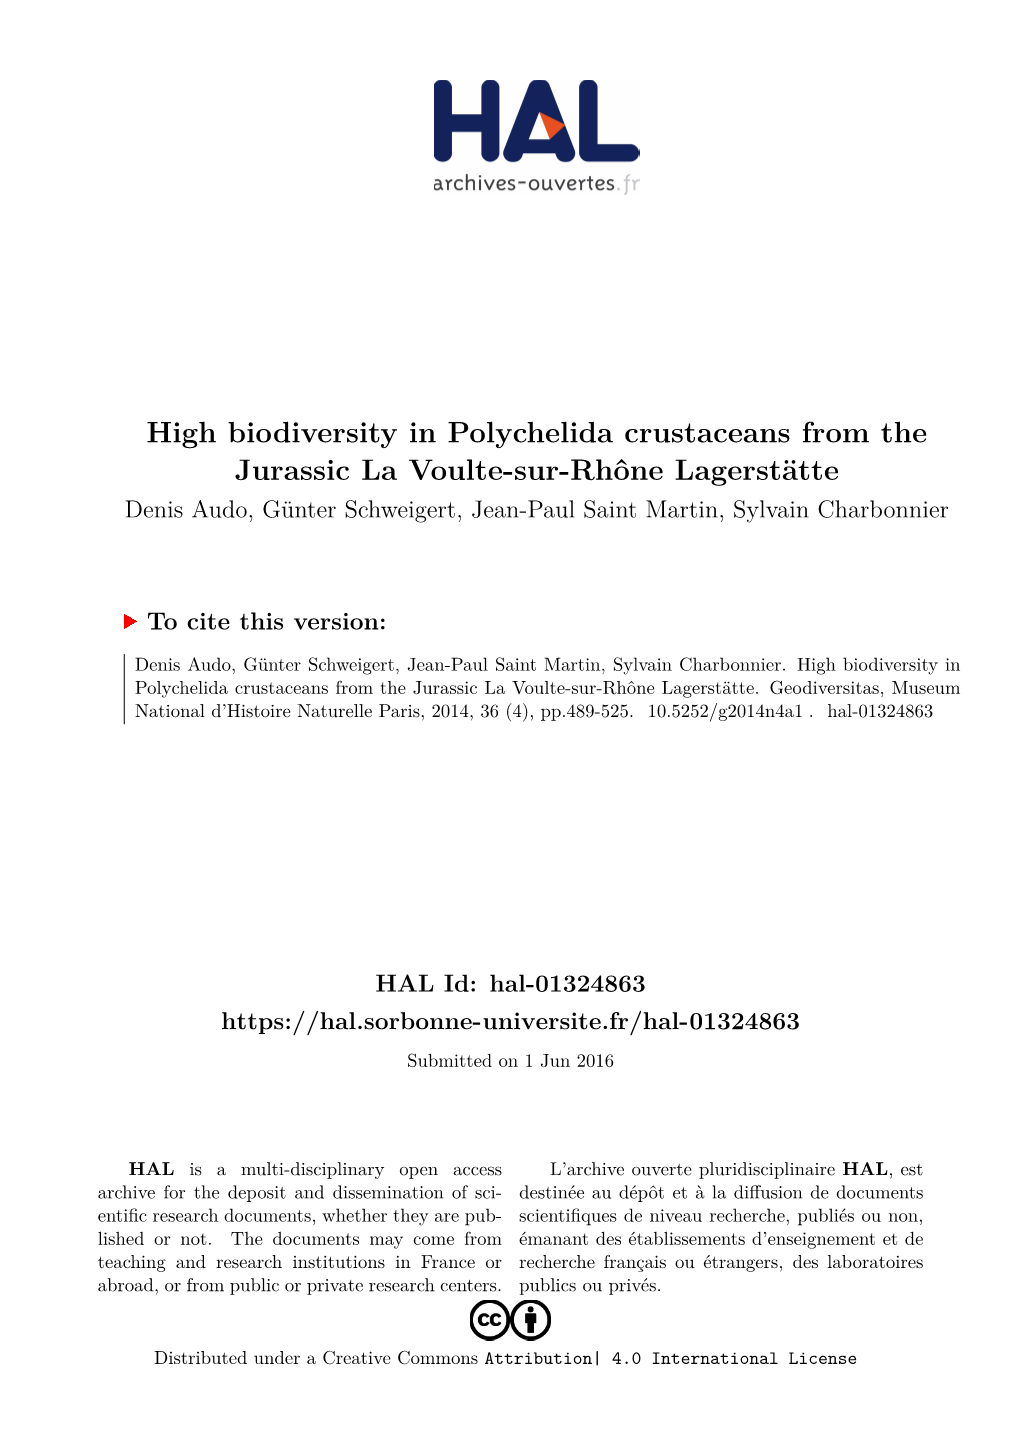 High Biodiversity in Polychelida Crustaceans from the Jurassic La Voulte-Sur-Rhône Lagerstätte